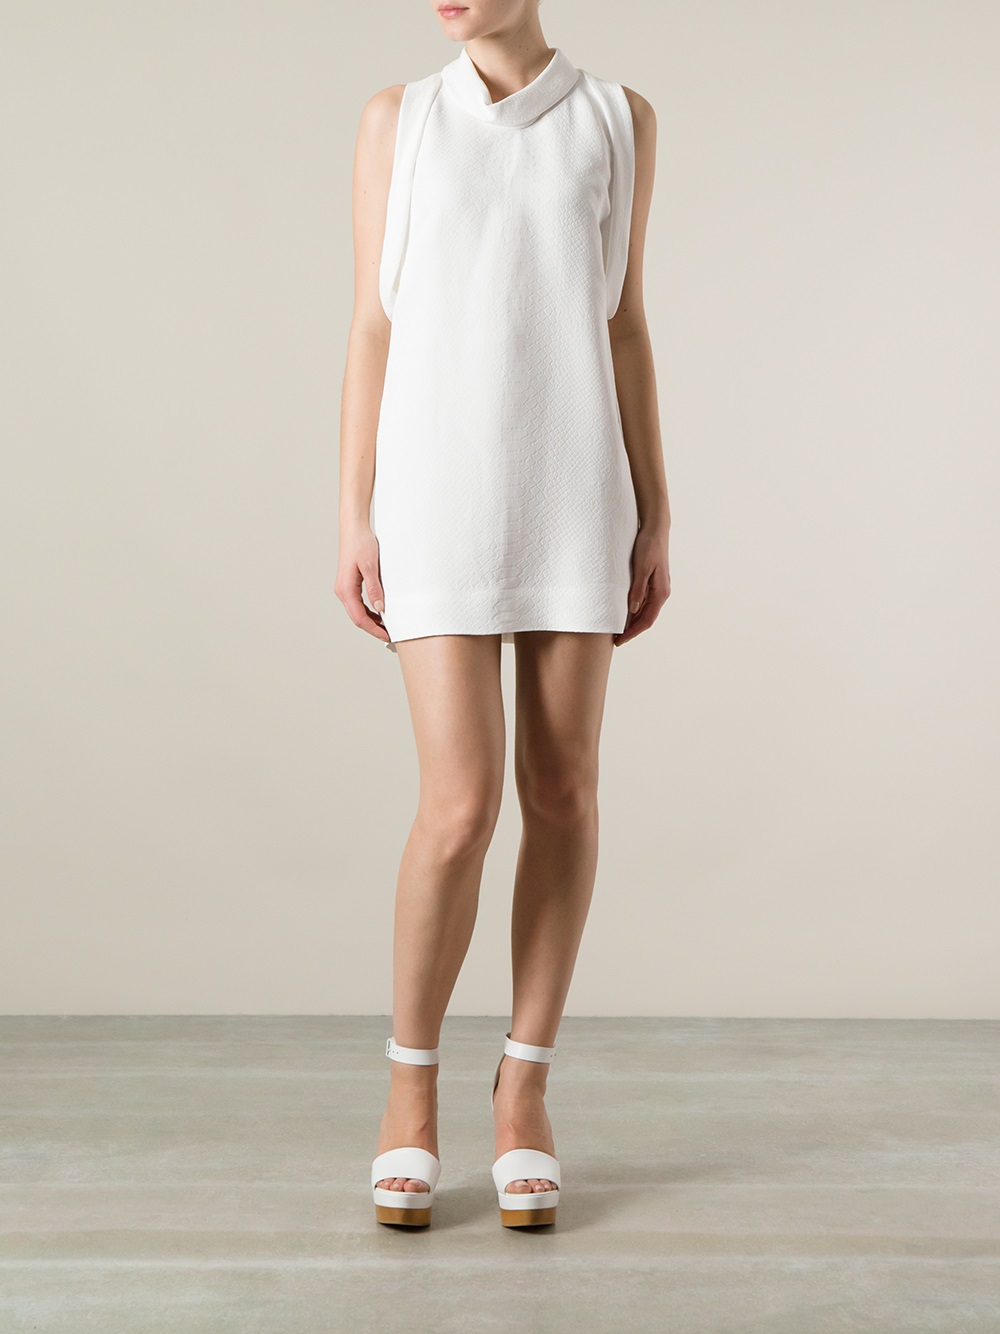 Lyst - Stella Mccartney Collar Neck Dress in White